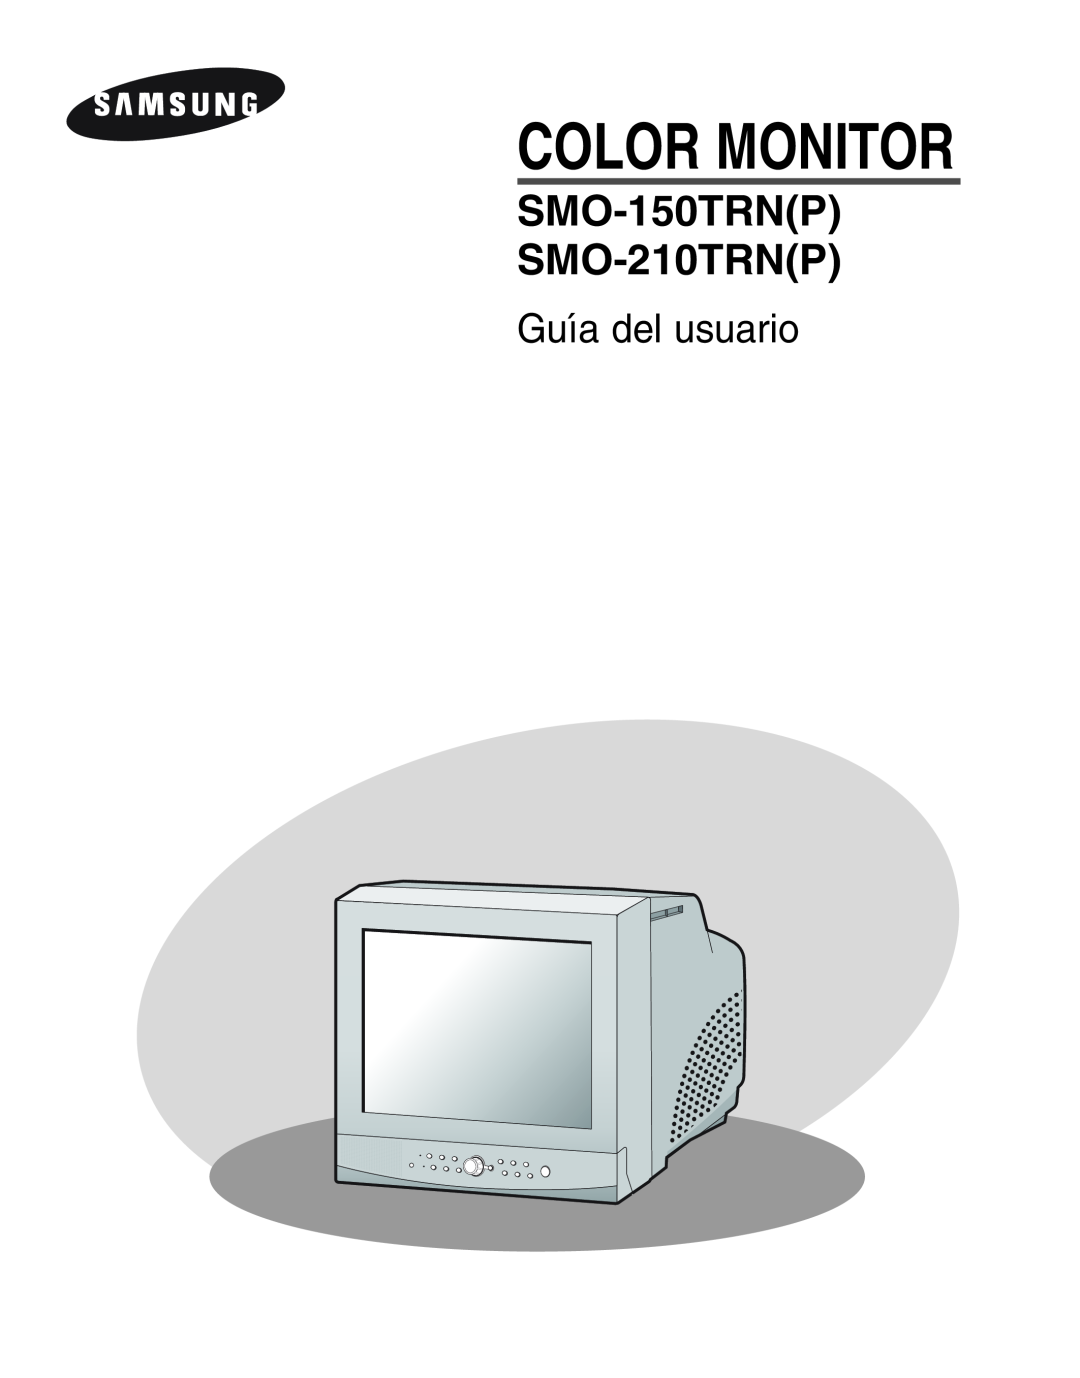 Samsung SMO-210TRP, SMO-210MP/UMG manual Guía del usuario, Color Monitor, SMO-150TRNP SMO-210TRNP 